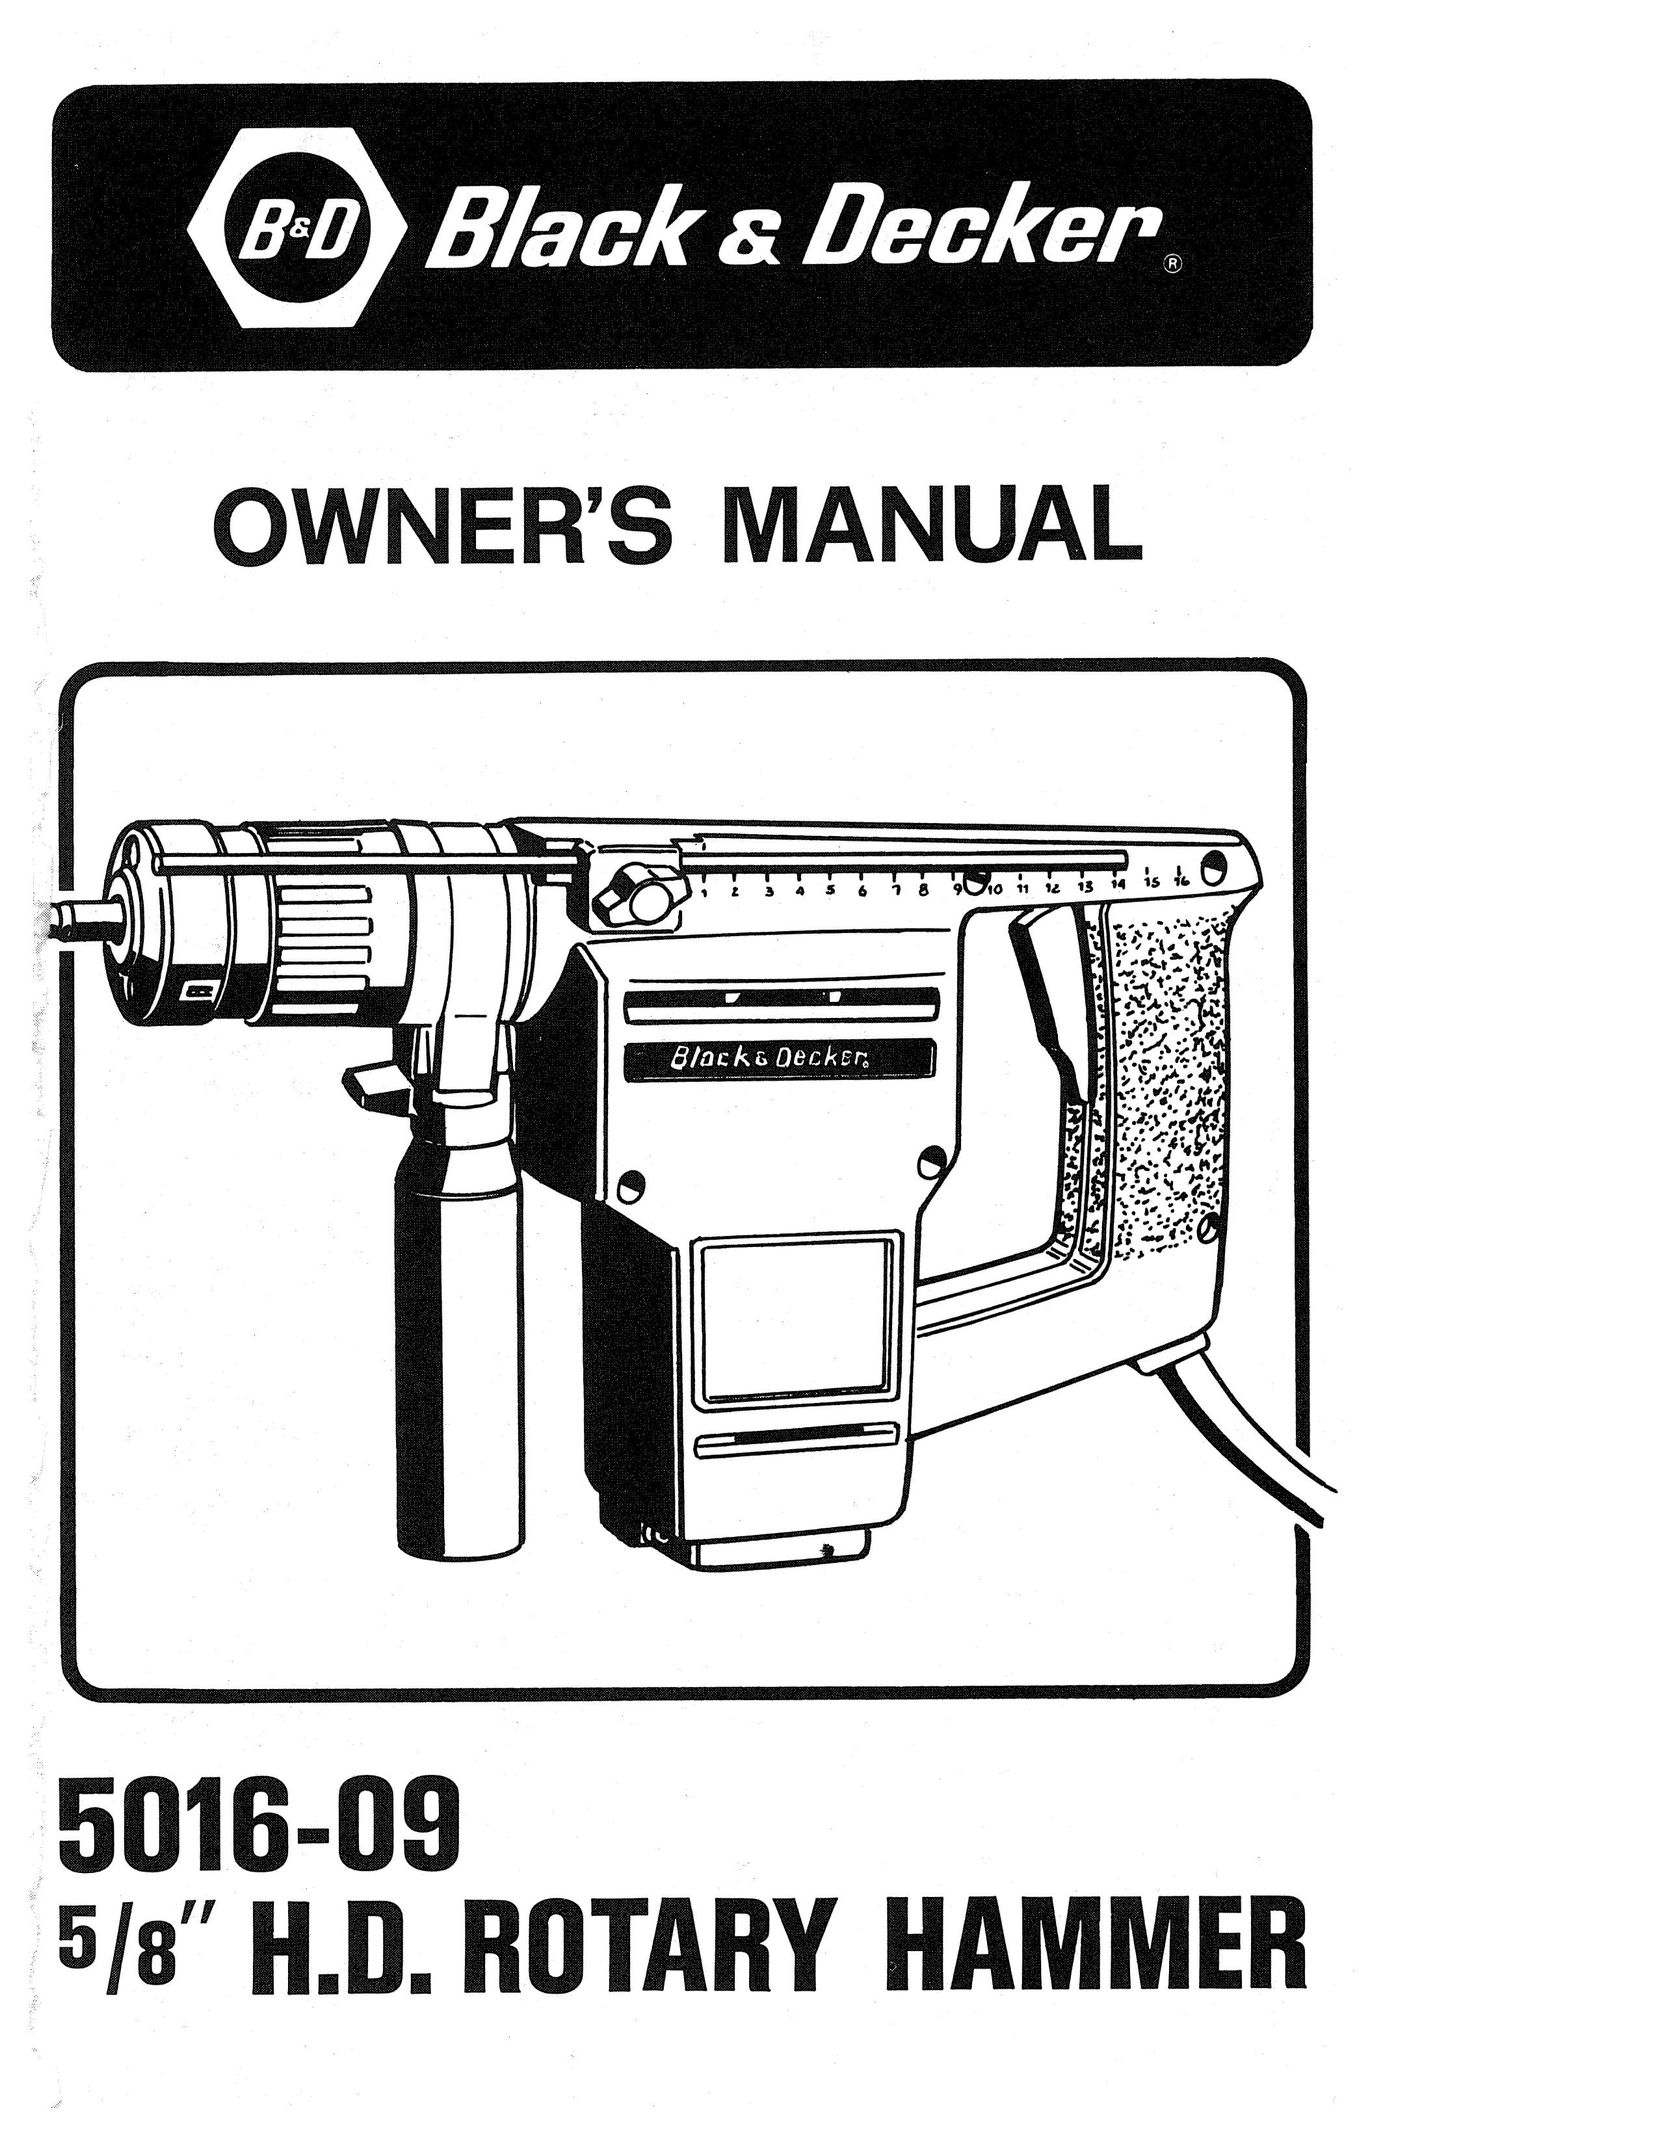 Black & Decker 5016-09 Power Hammer User Manual